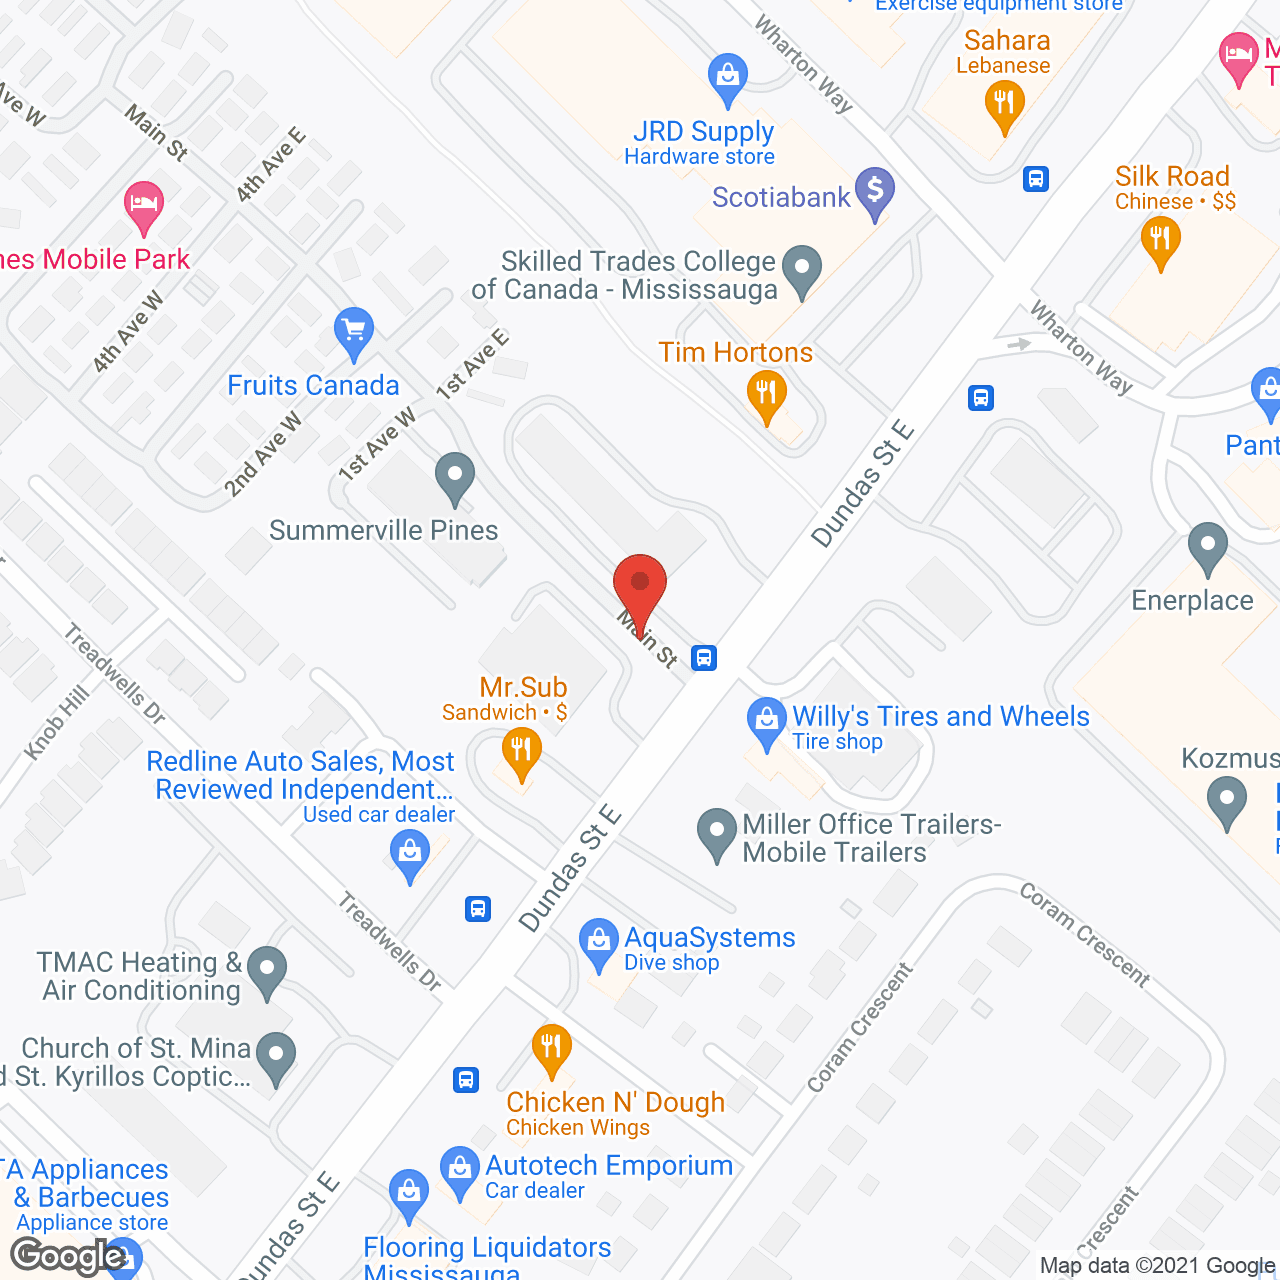 Summerville Pines in google map